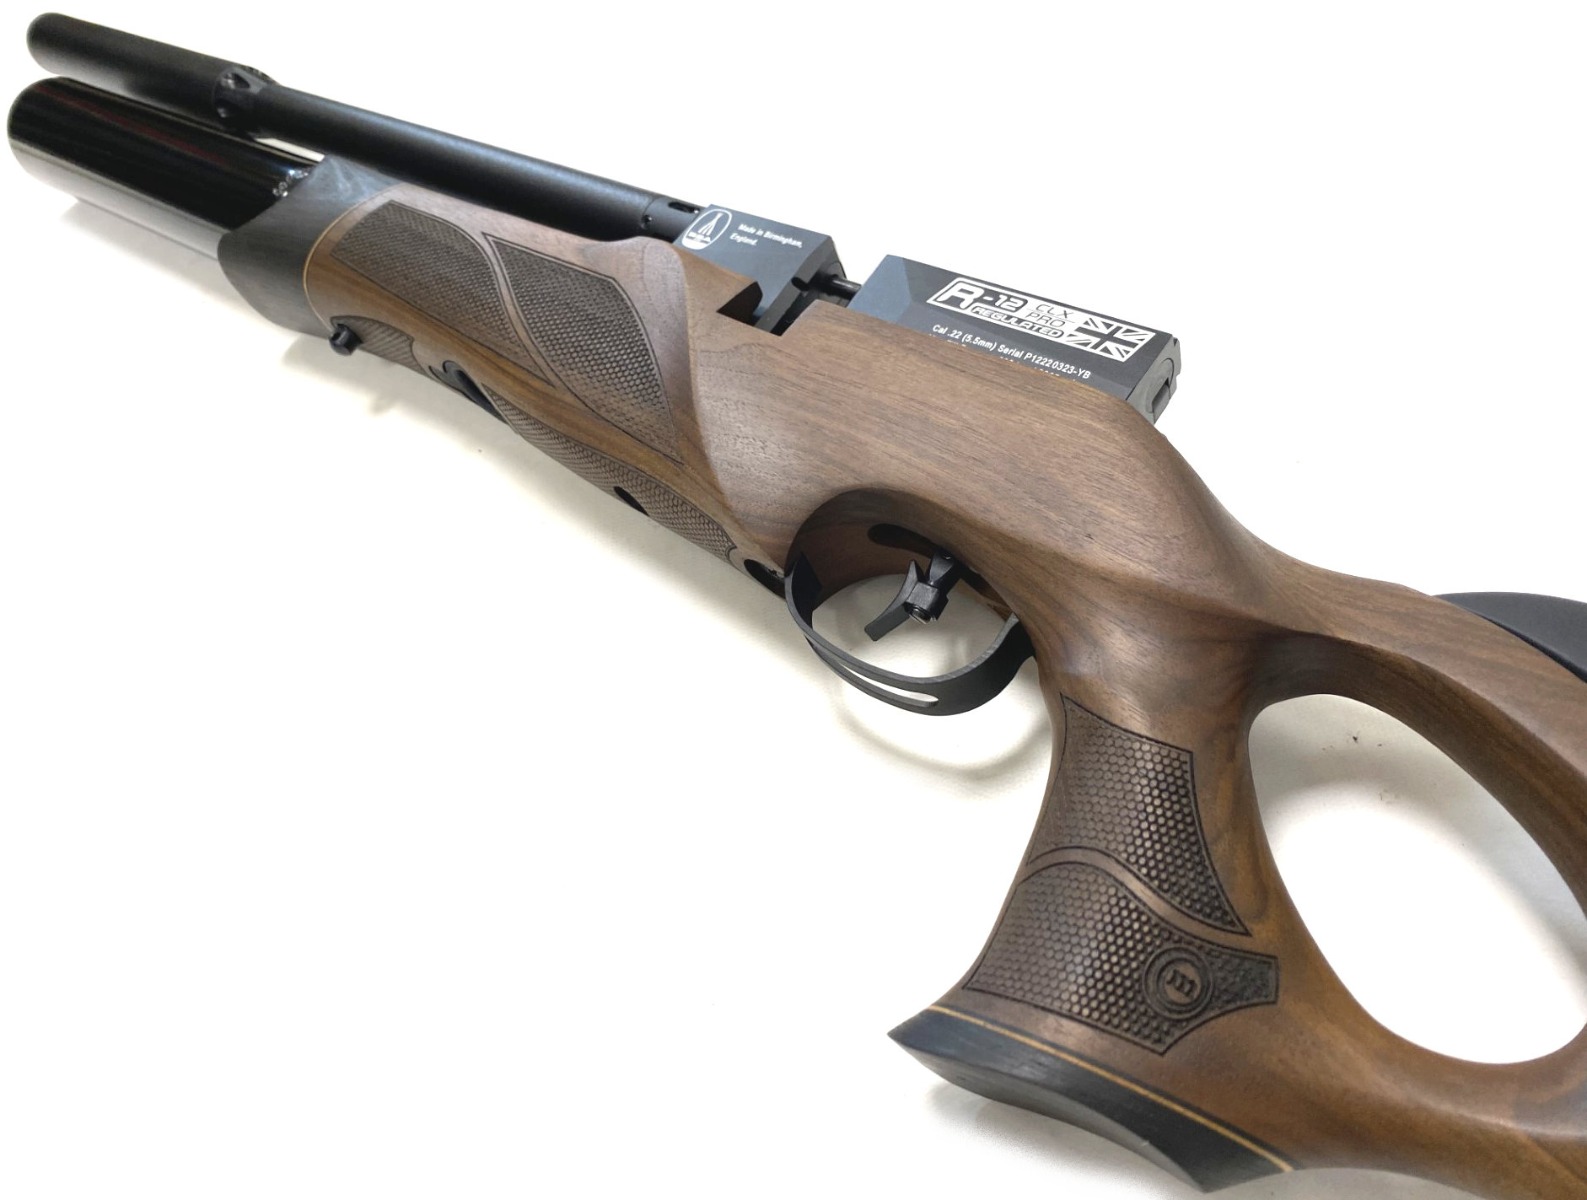 BSA R12 CLX Pro Walnut Super Carbine .22 Air Rifle - 230808/008 Image 2